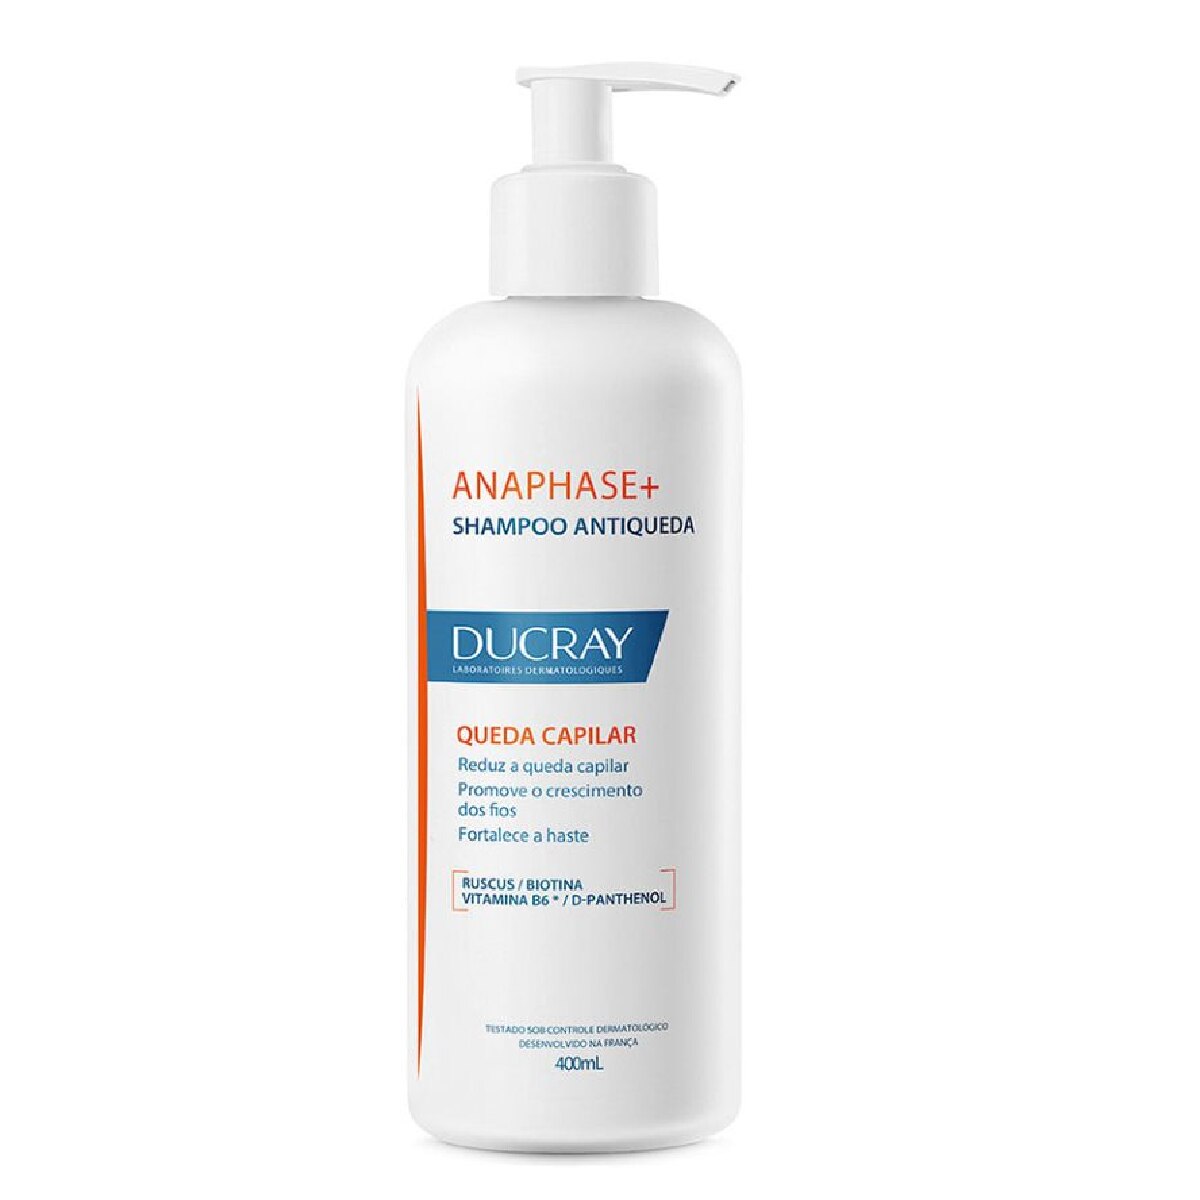 Shampoo Ducray Anaphase+ Antiqueda 400ml